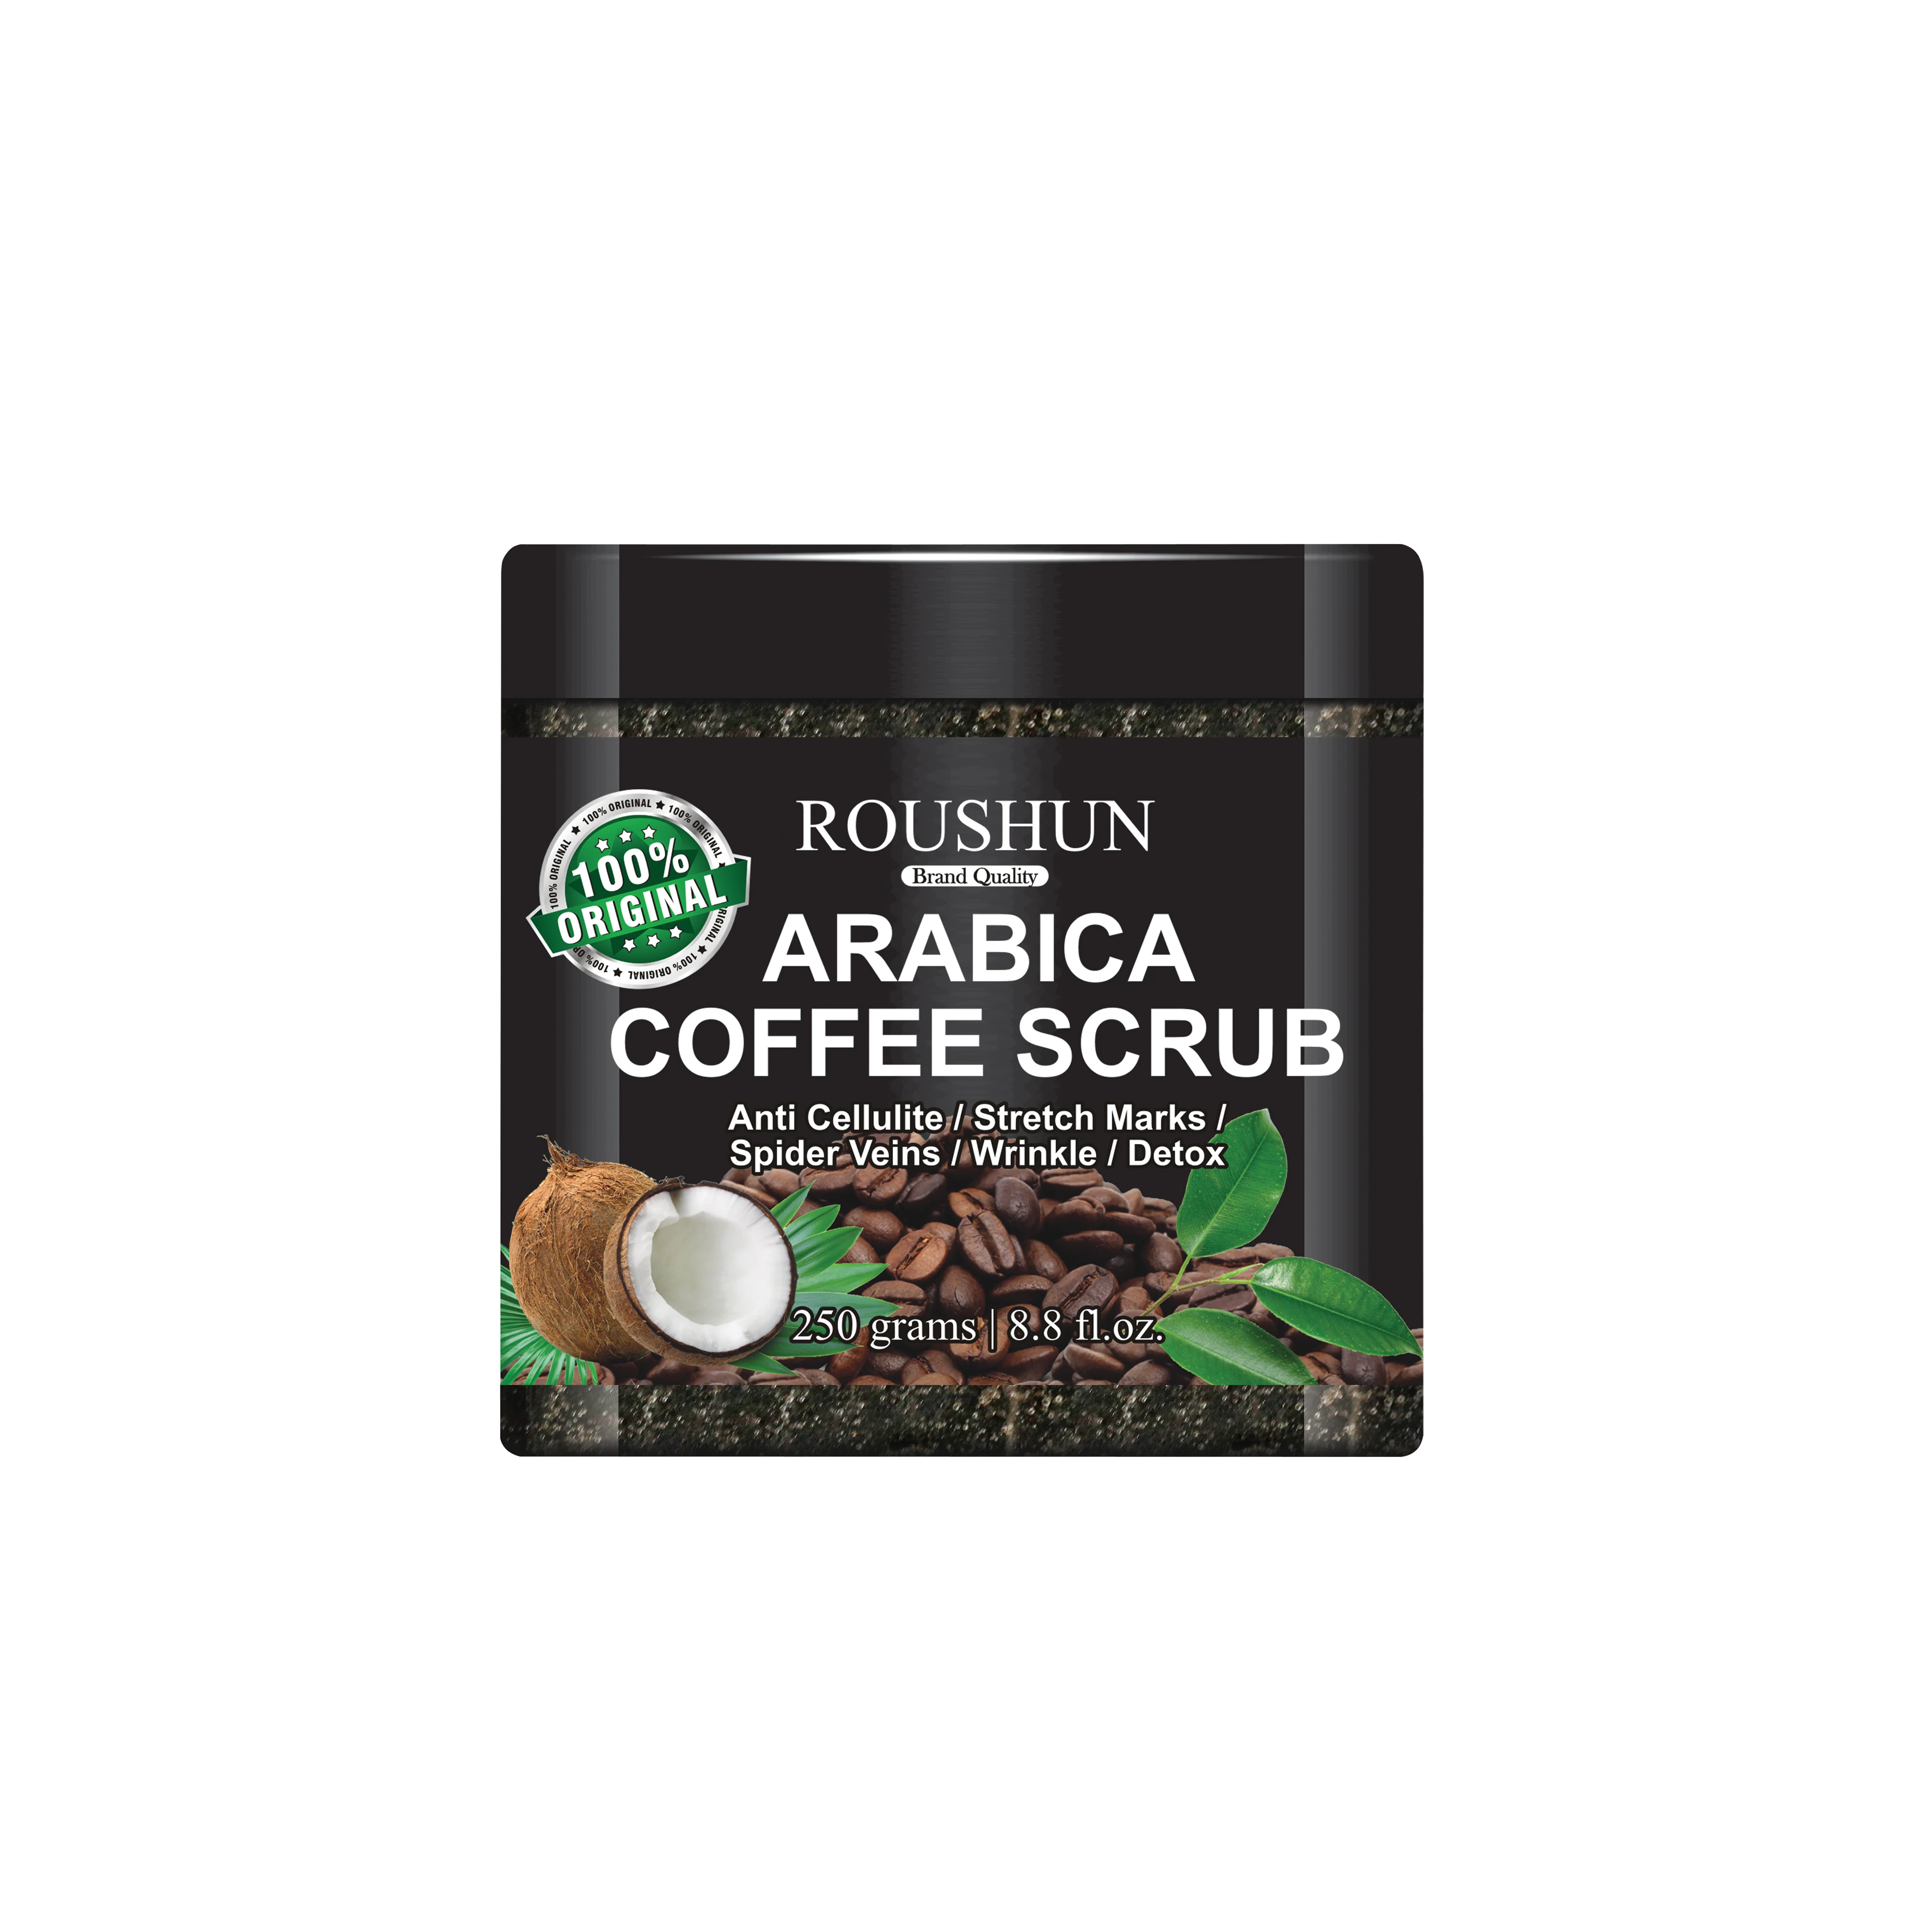 

Roushun Body Scrub Arabica Coffee Scrub Whitening Anti Cellulite Stretch Marks Spider Veins Wrinkle/Detox, Brown